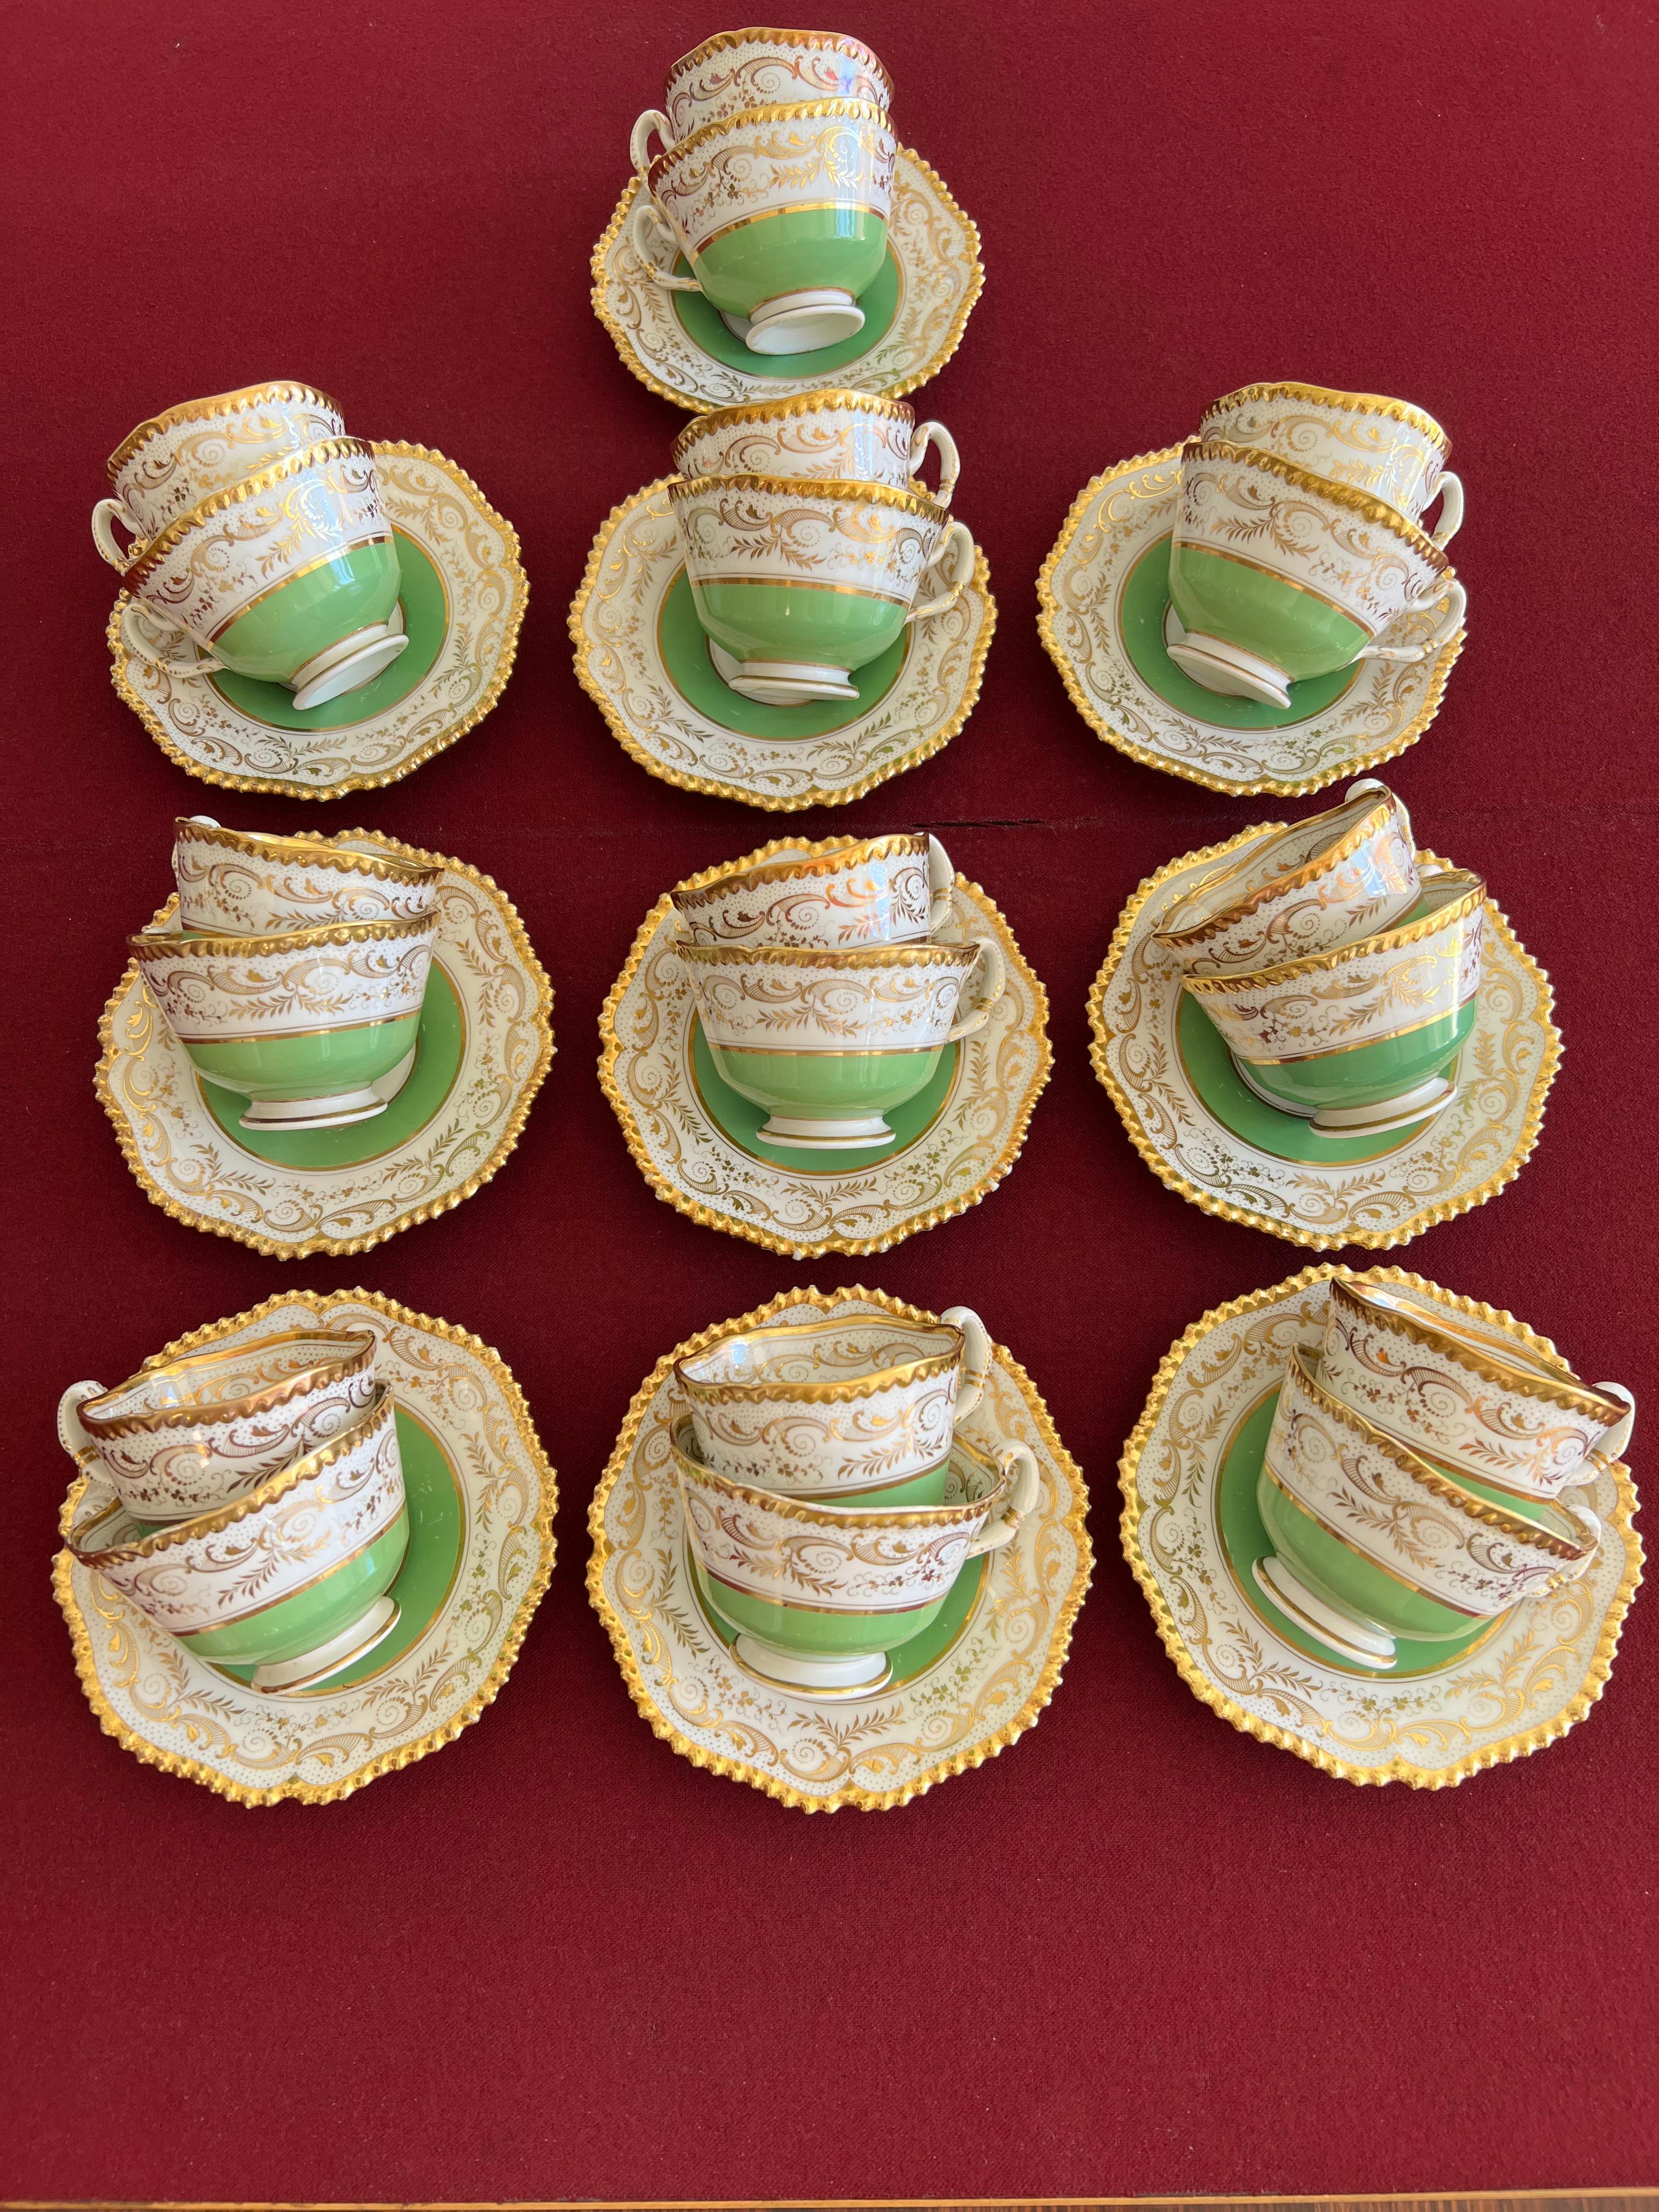 Flight Barr & Barr Worcester Porcelain Tea & Coffee Set C.1820-30 3